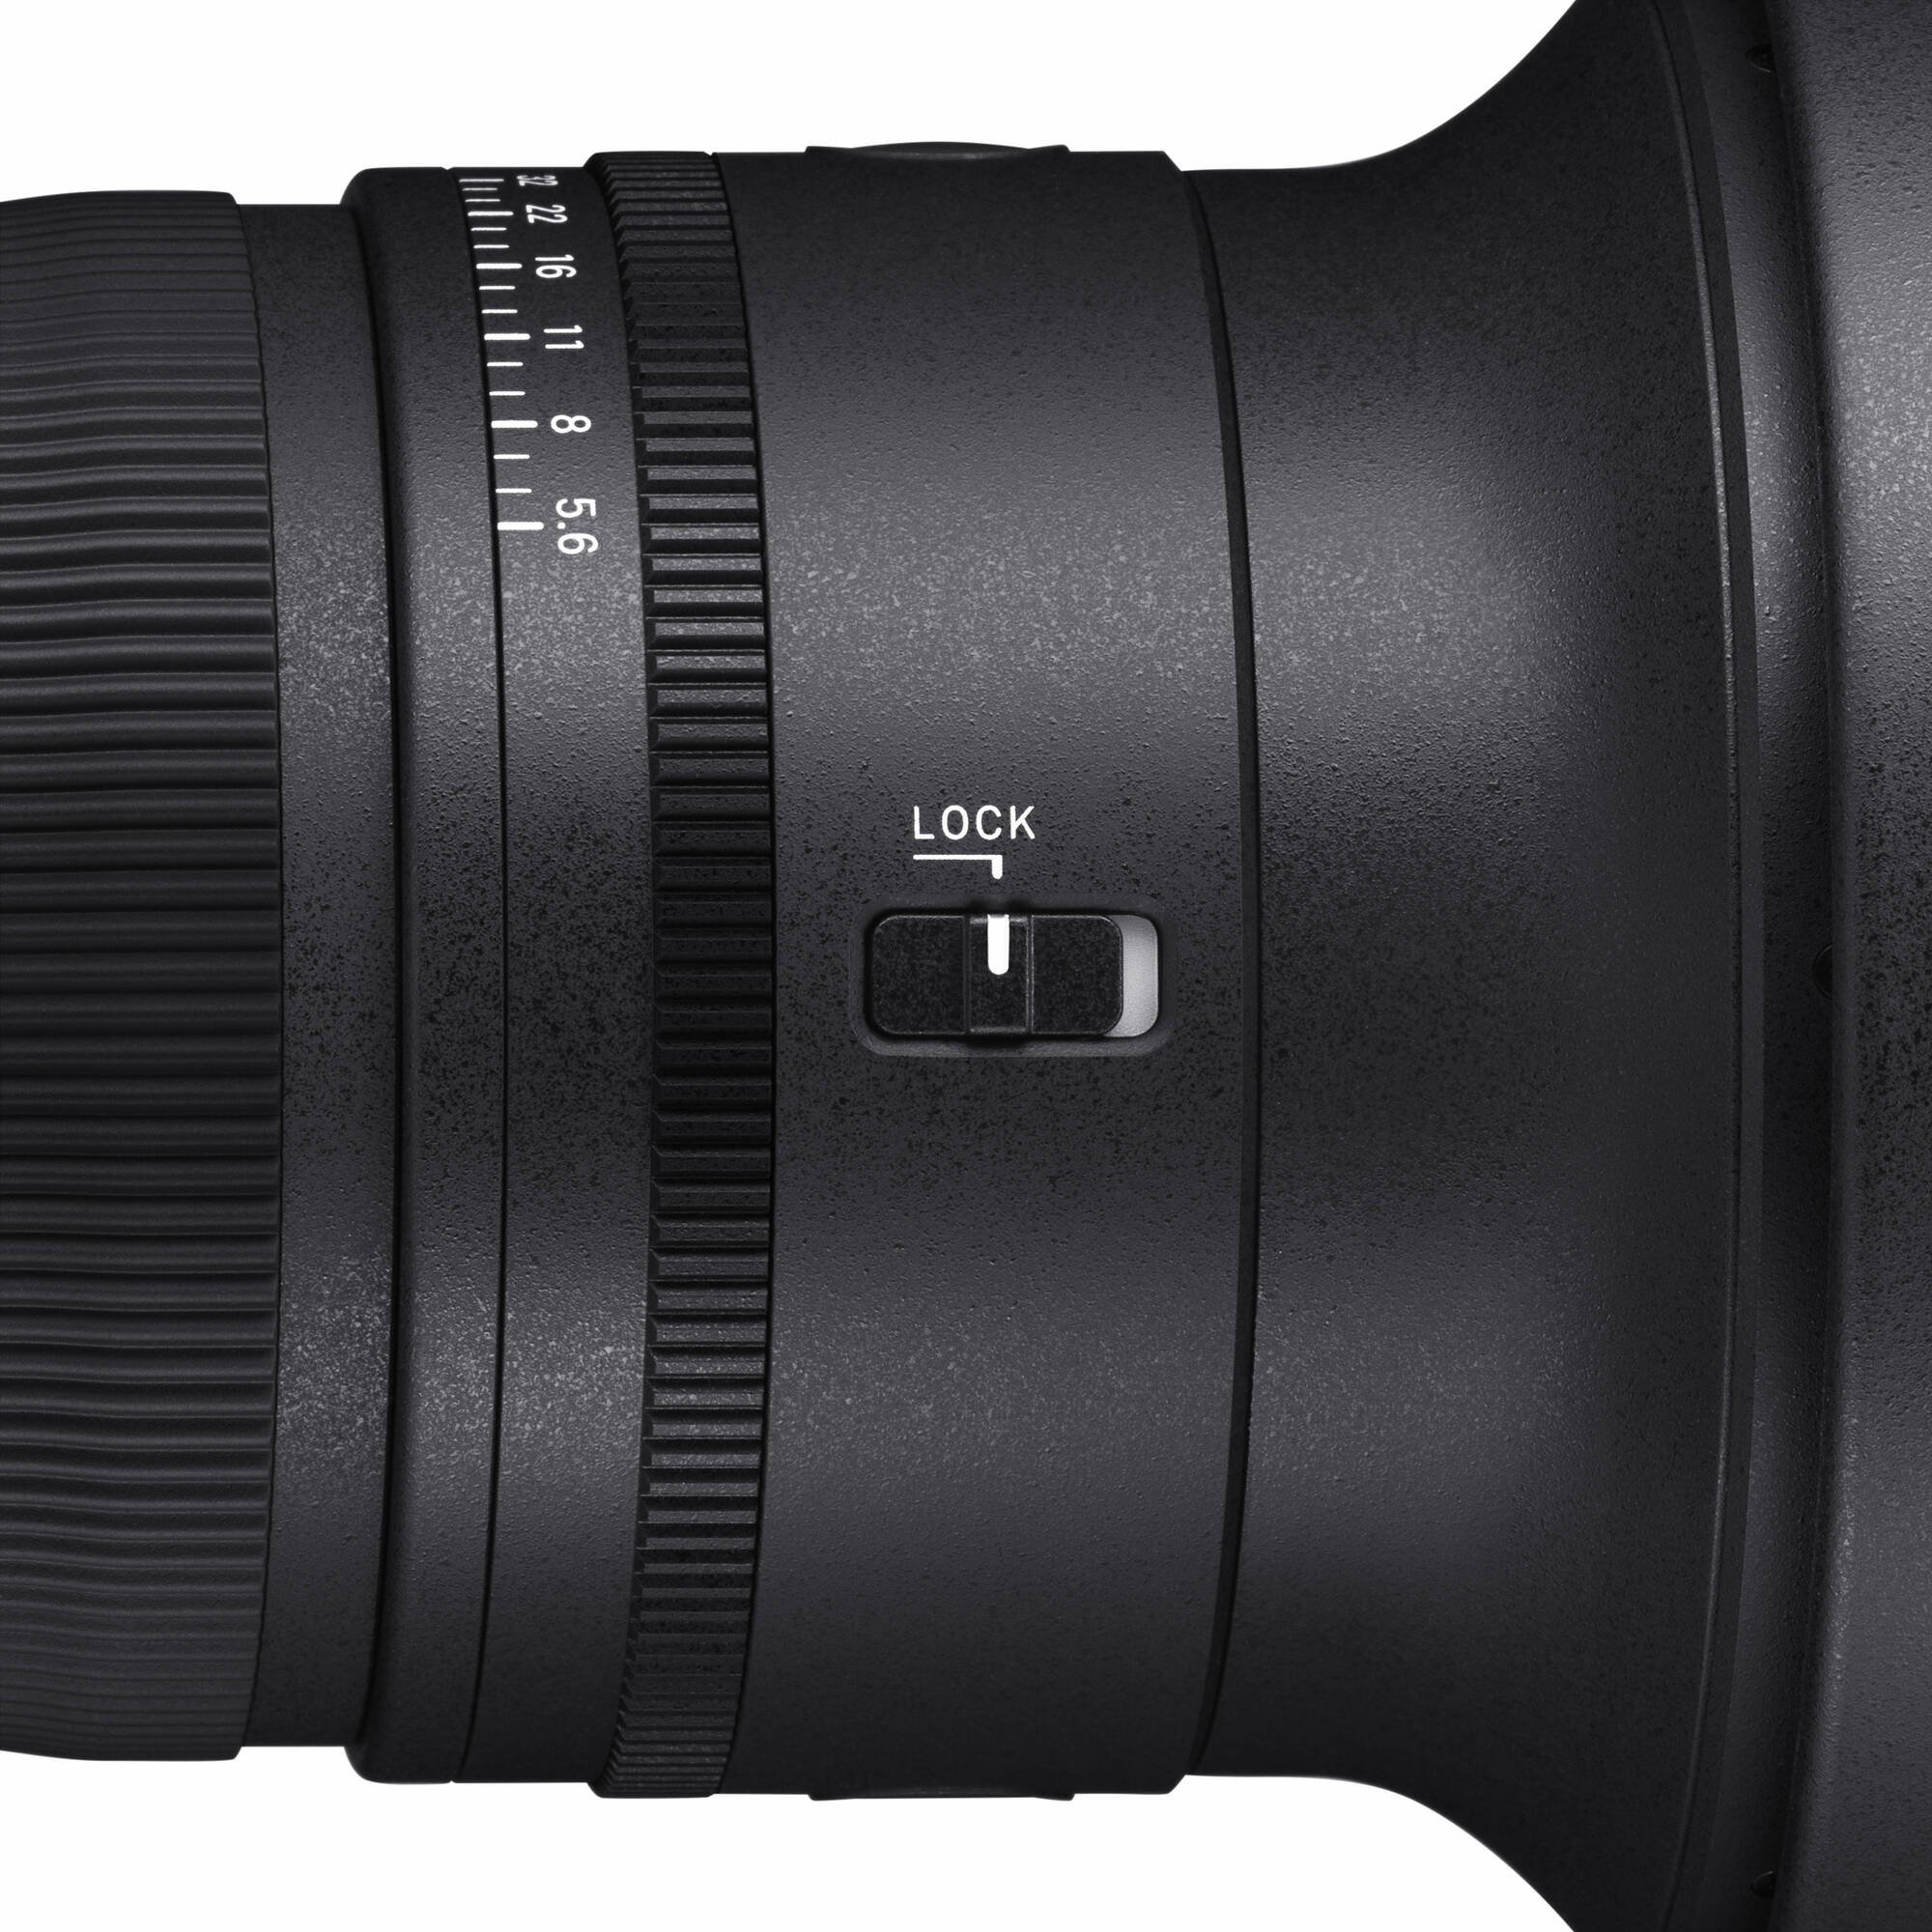 Sigma 500 mm f / 5.6 dg dn os sportive Lens - Sony e